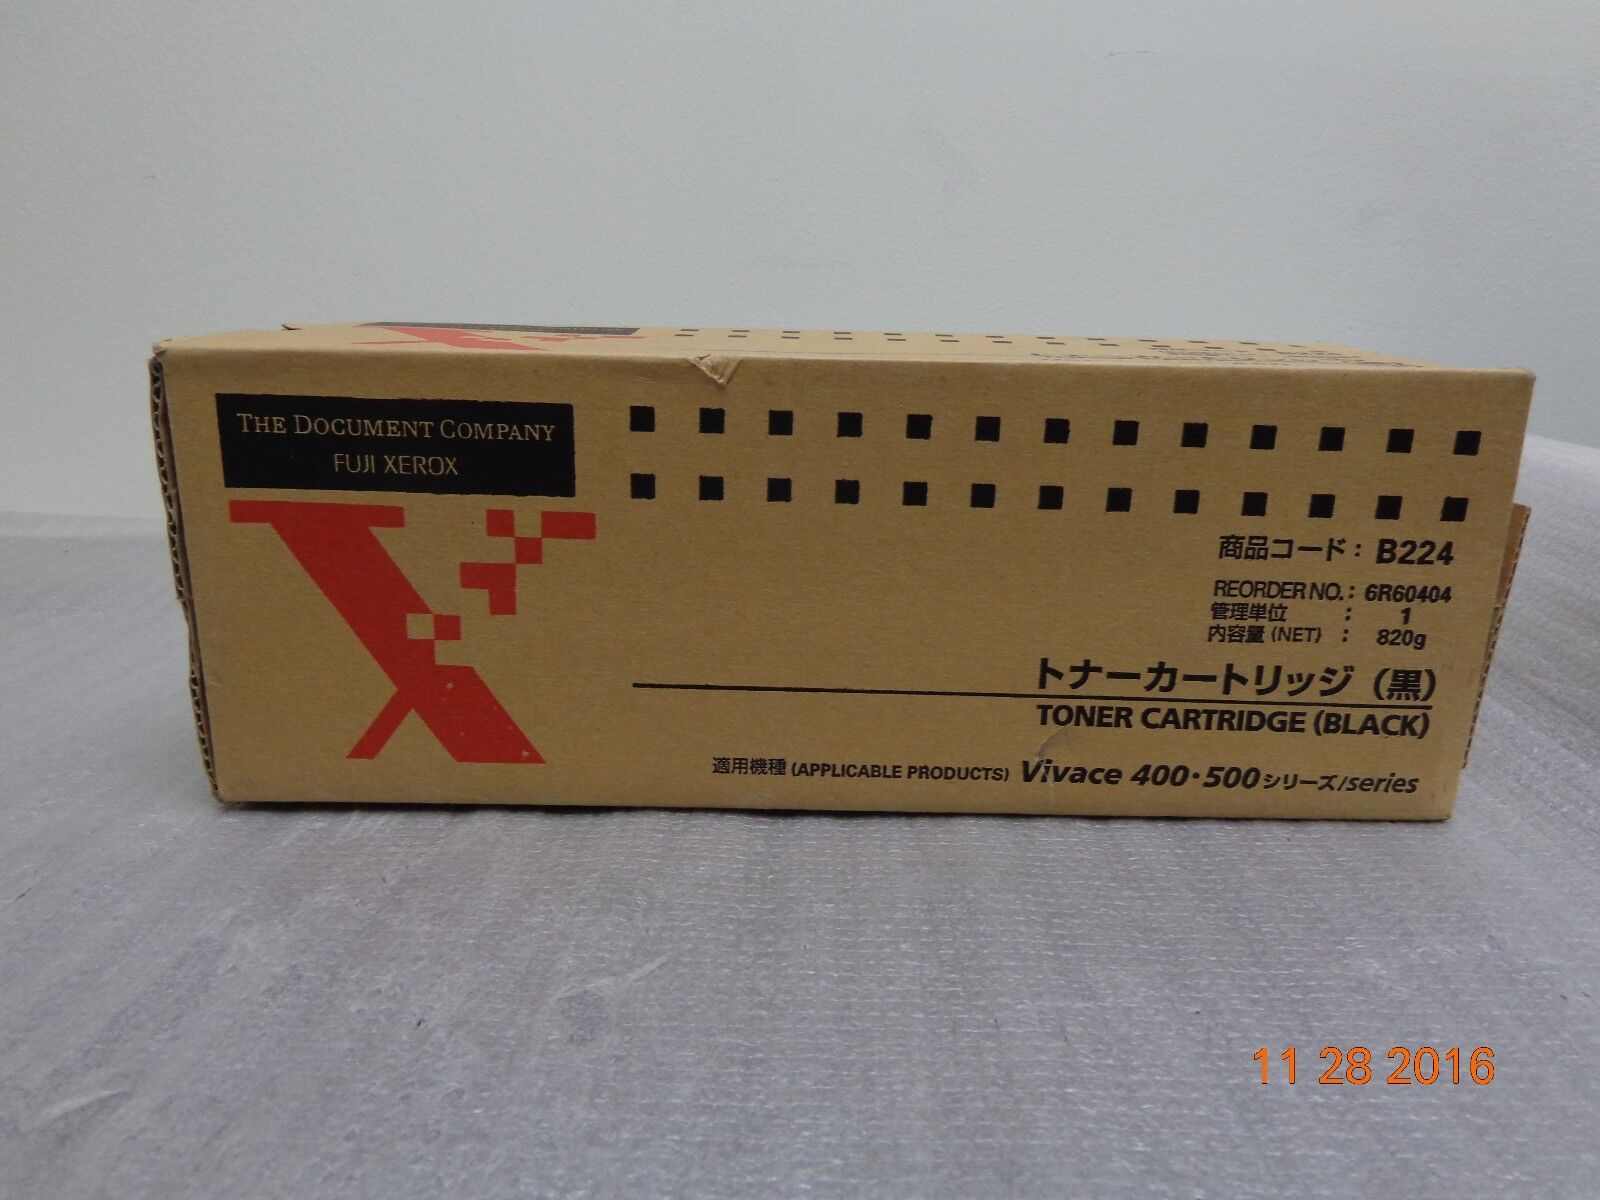 Fuji Xerox B224 Toner Cartridge Black 6R60404 net 820g Vivace 400-500 Series 